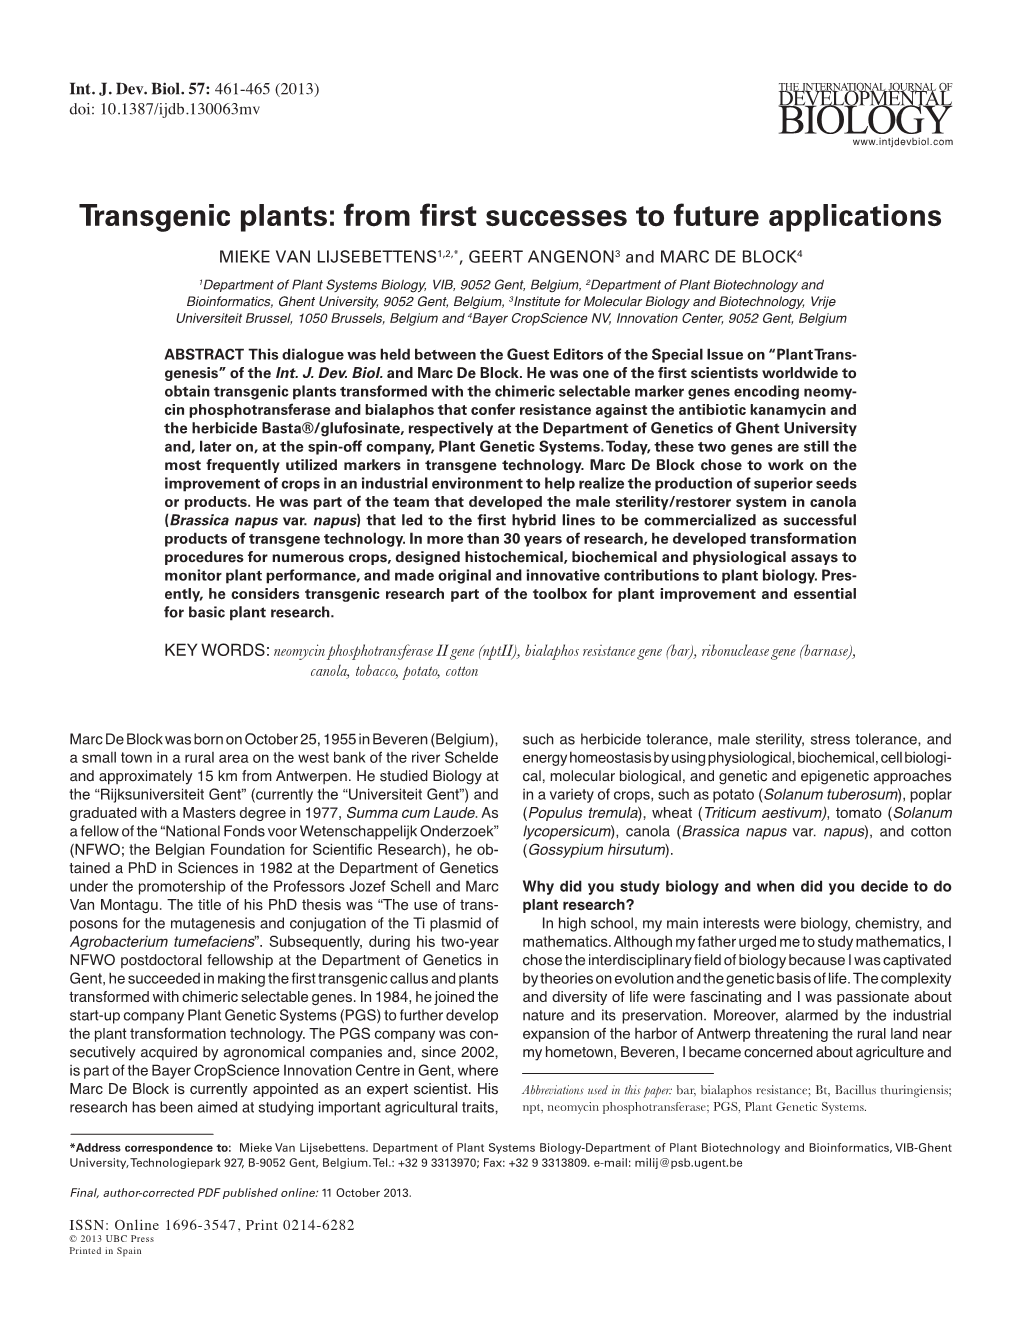 Transgenic Plants: from First Successes to Future Applications MIEKE VAN LIJSEBETTENS1,2,*, GEERT ANGENON3 and MARC DE BLOCK4